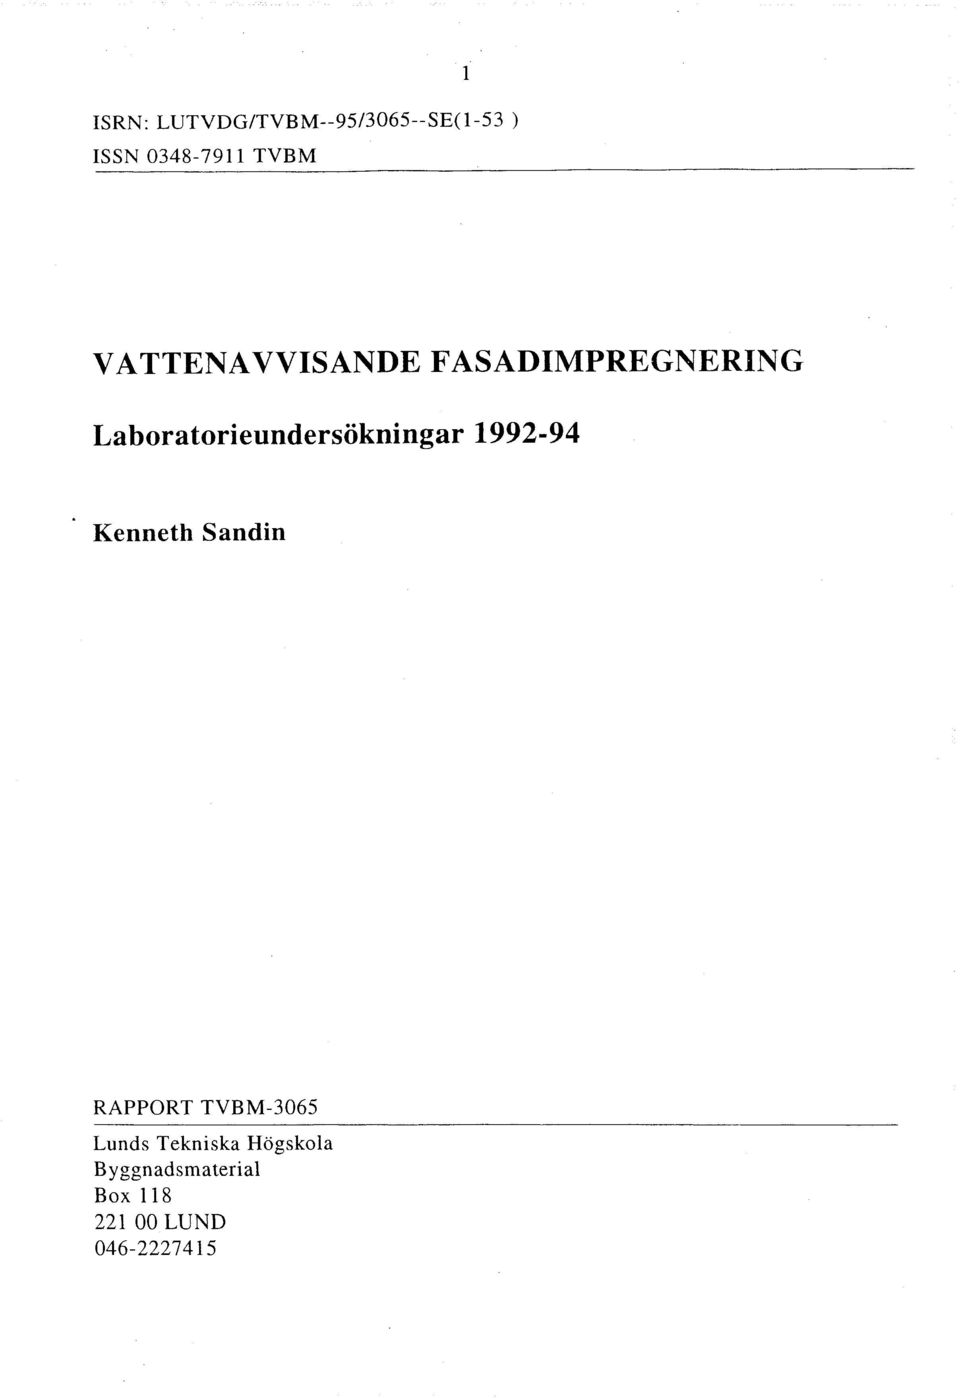 Laboratorieundersökningar 1992-94 Kenneth Sandin RAPPORT